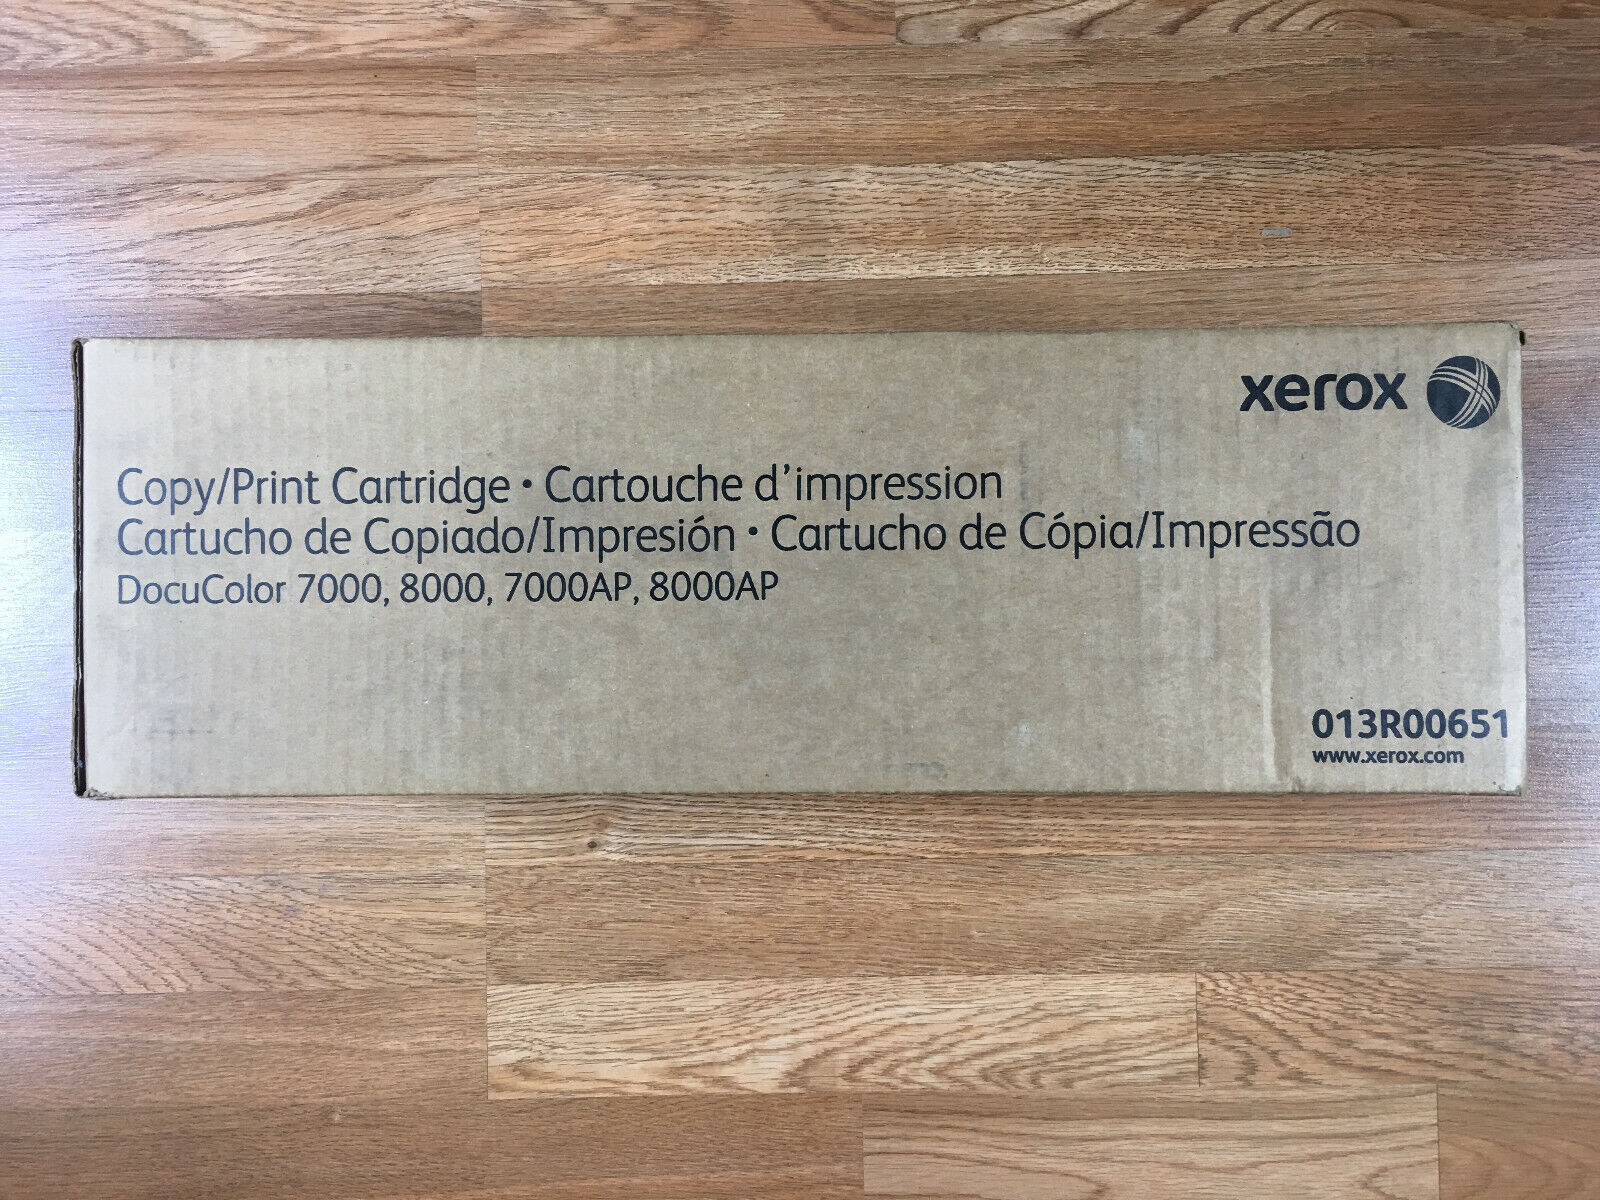 Xerox Copy Print Cartridge DocuColor 7000 8000 7000AP 8000AP Same Day Shipping